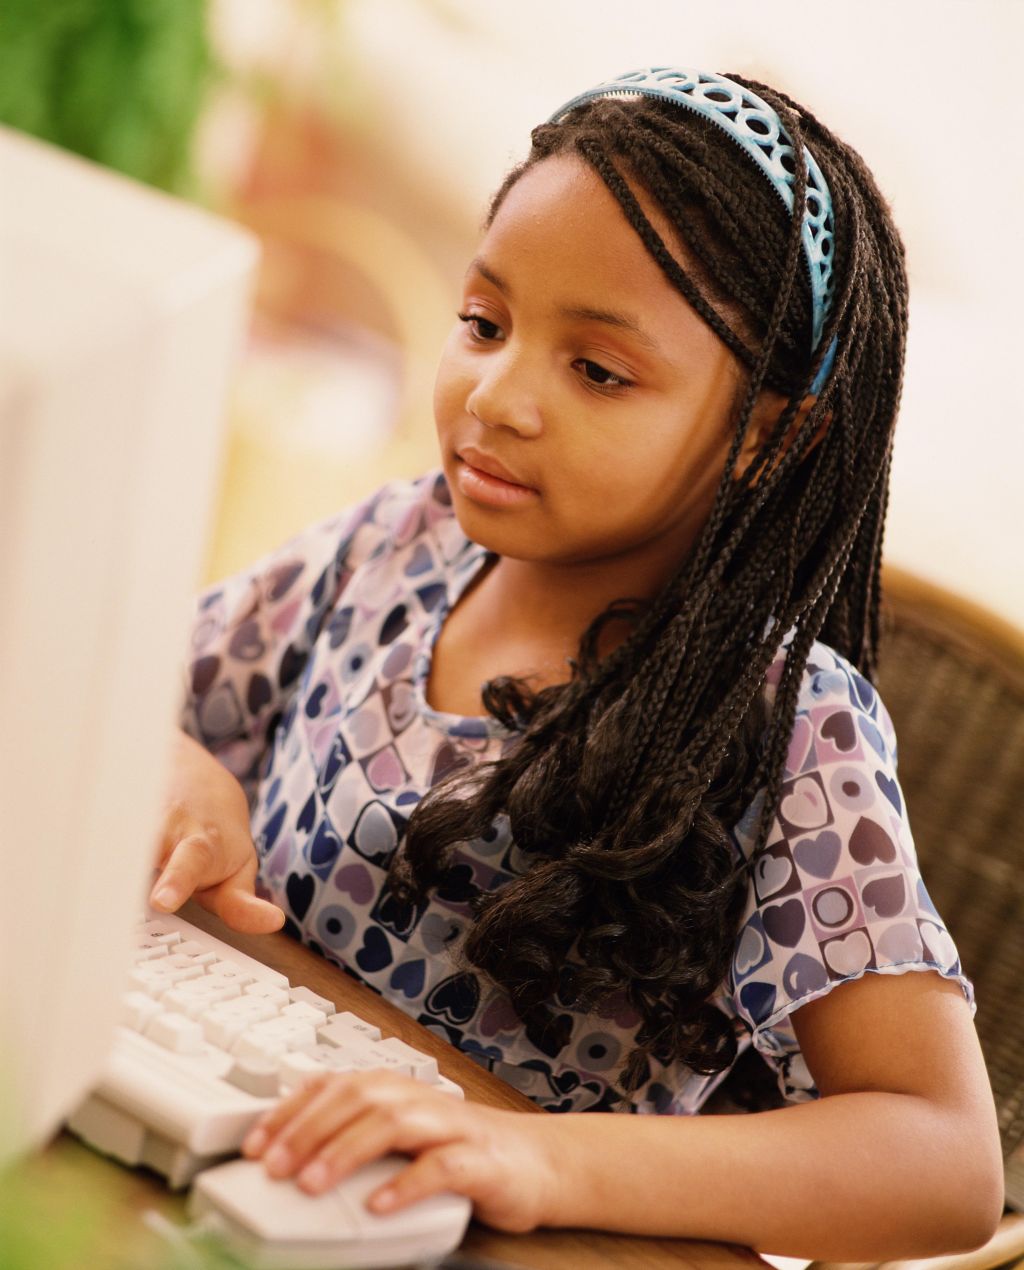 Girl (7-9) using computer, close-up